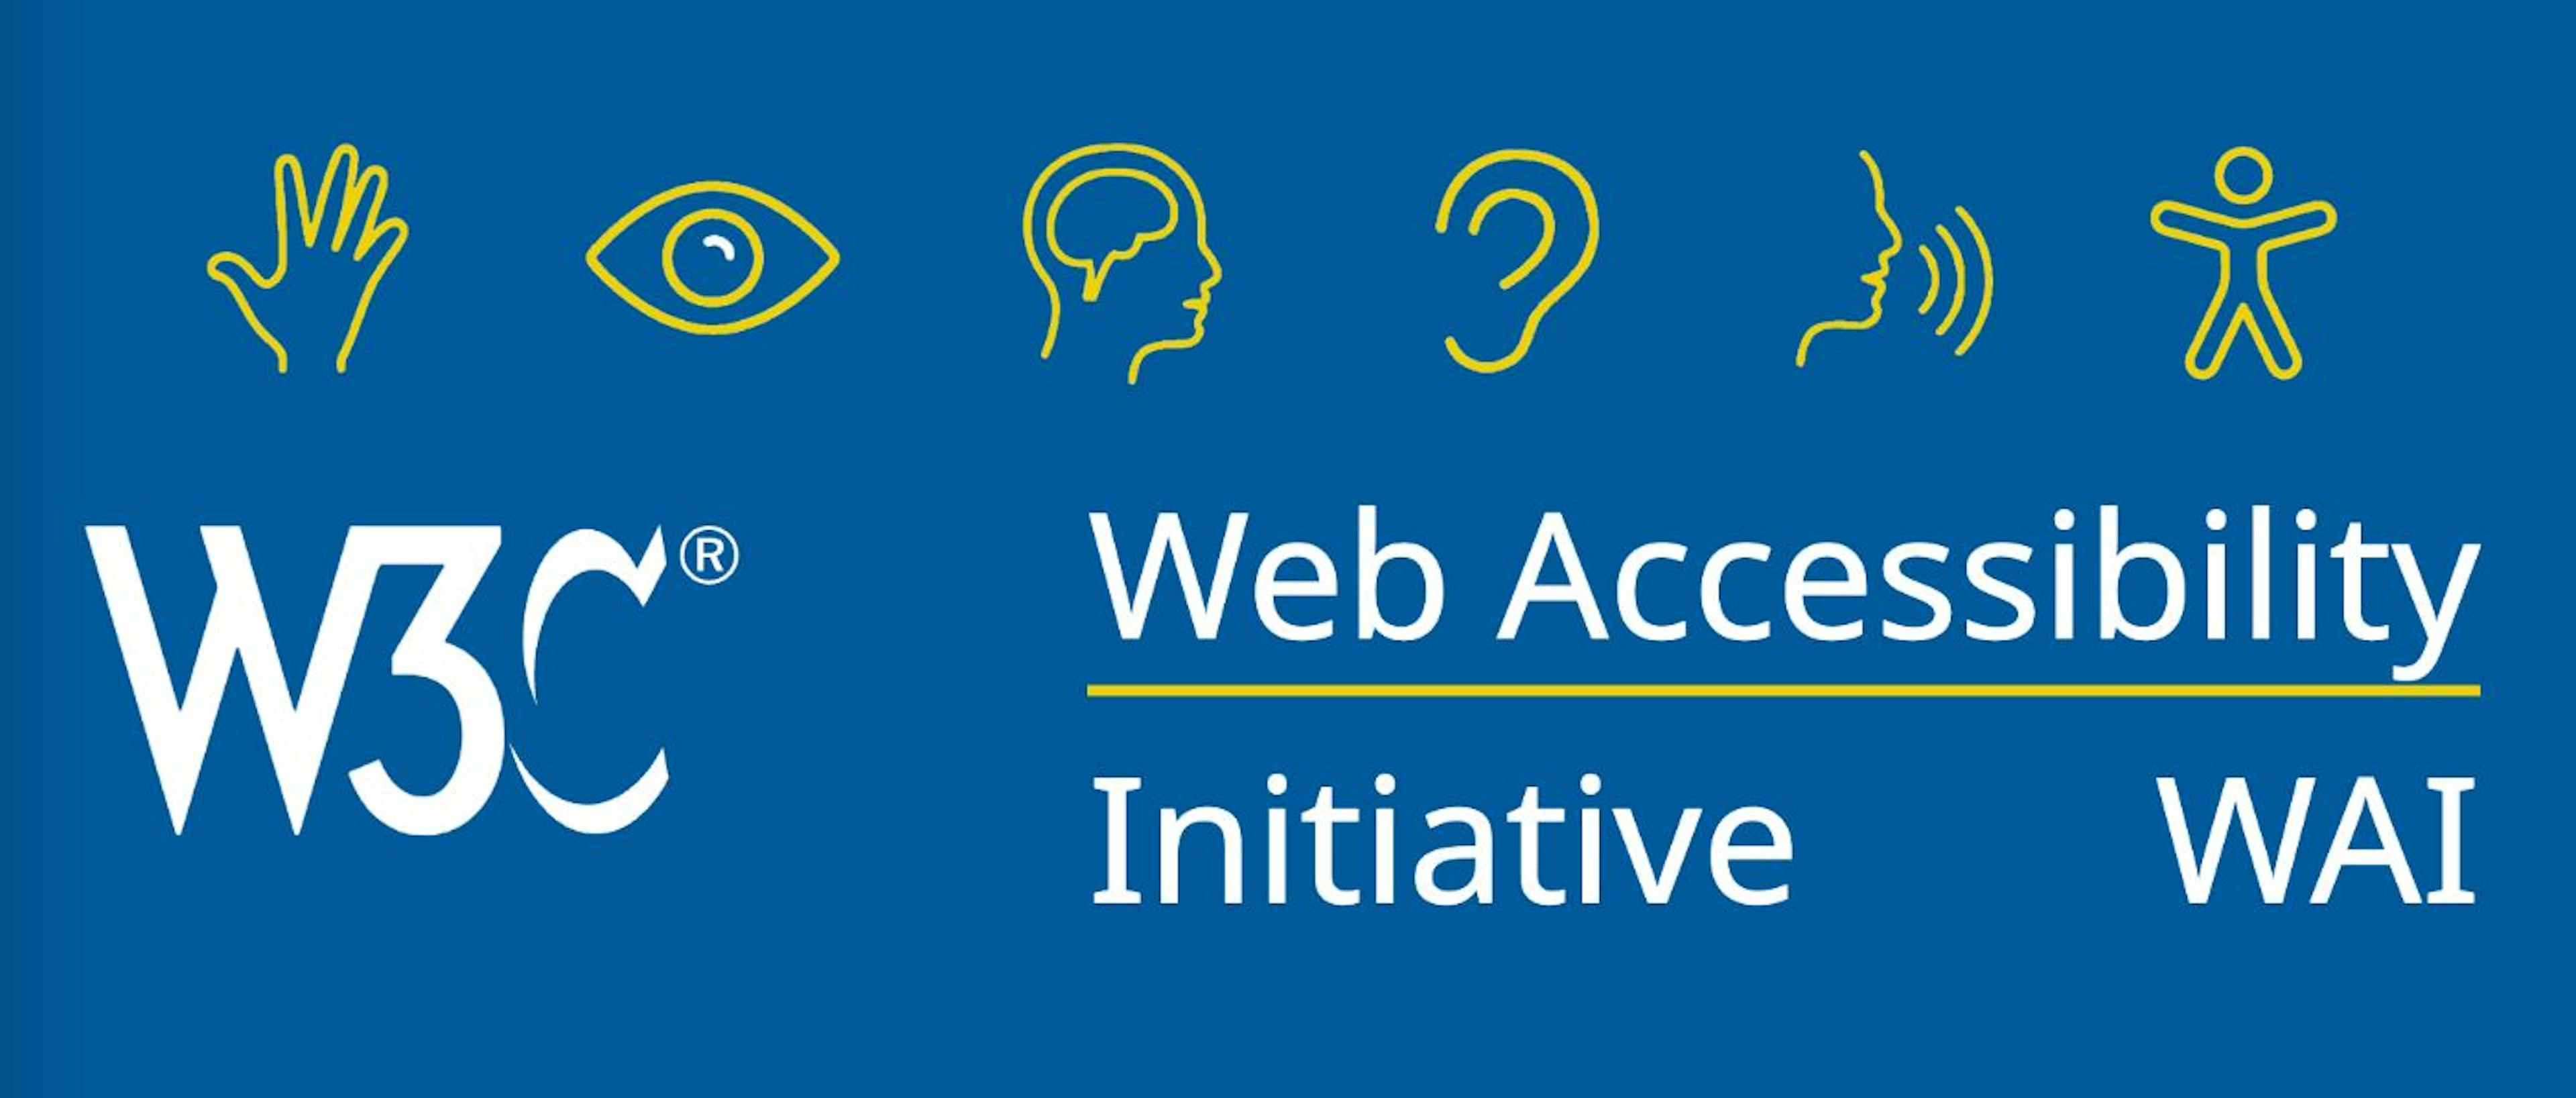 W3C Web Accessibility Initiative logo